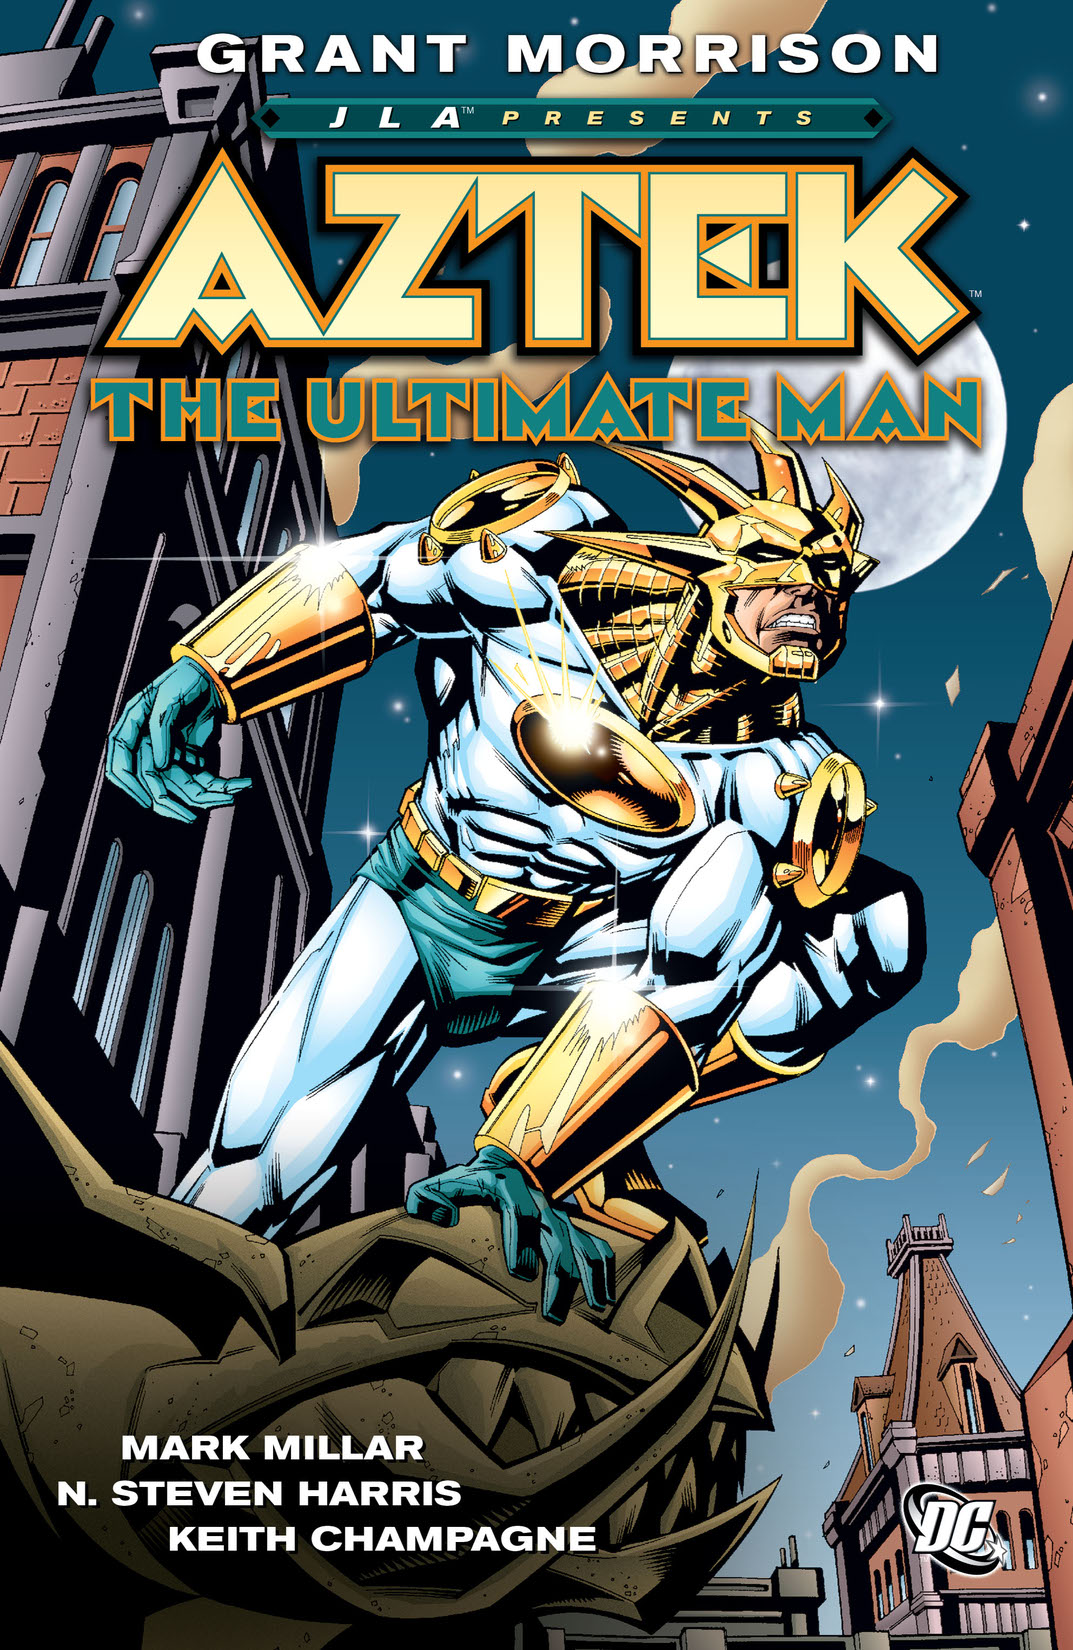 JLA Presents: Aztek: The Ultimate Man preview images